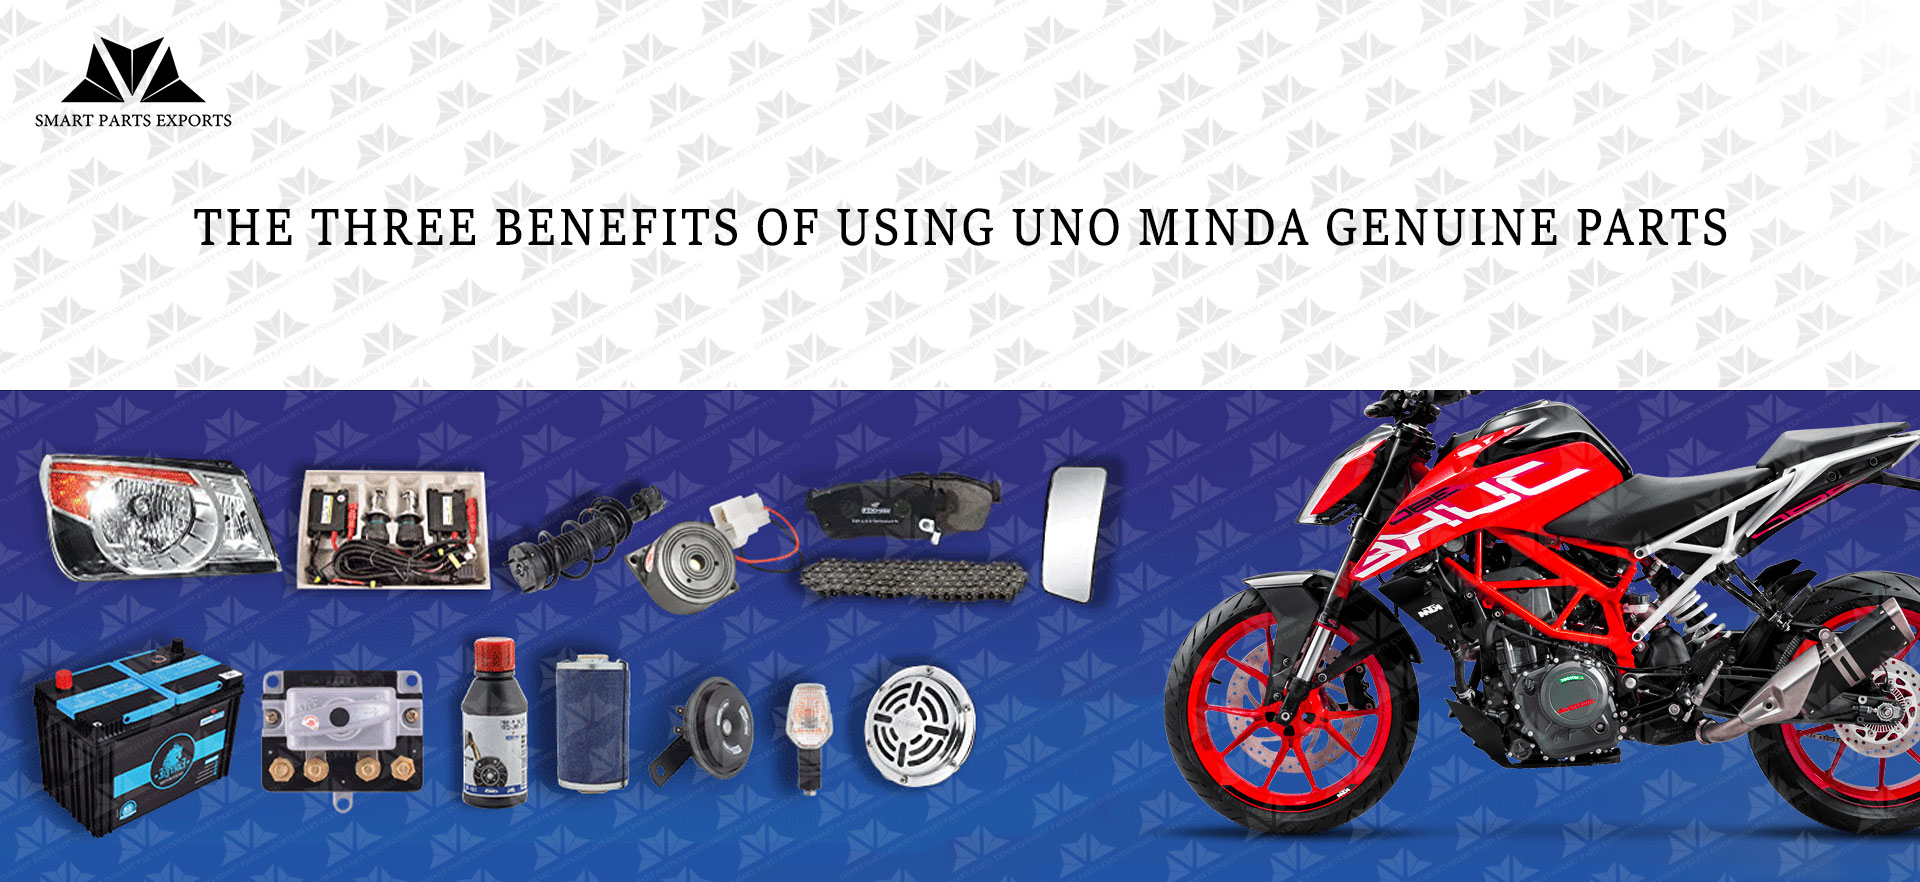 The Three Benefits of Using UNO Minda Genuine Parts